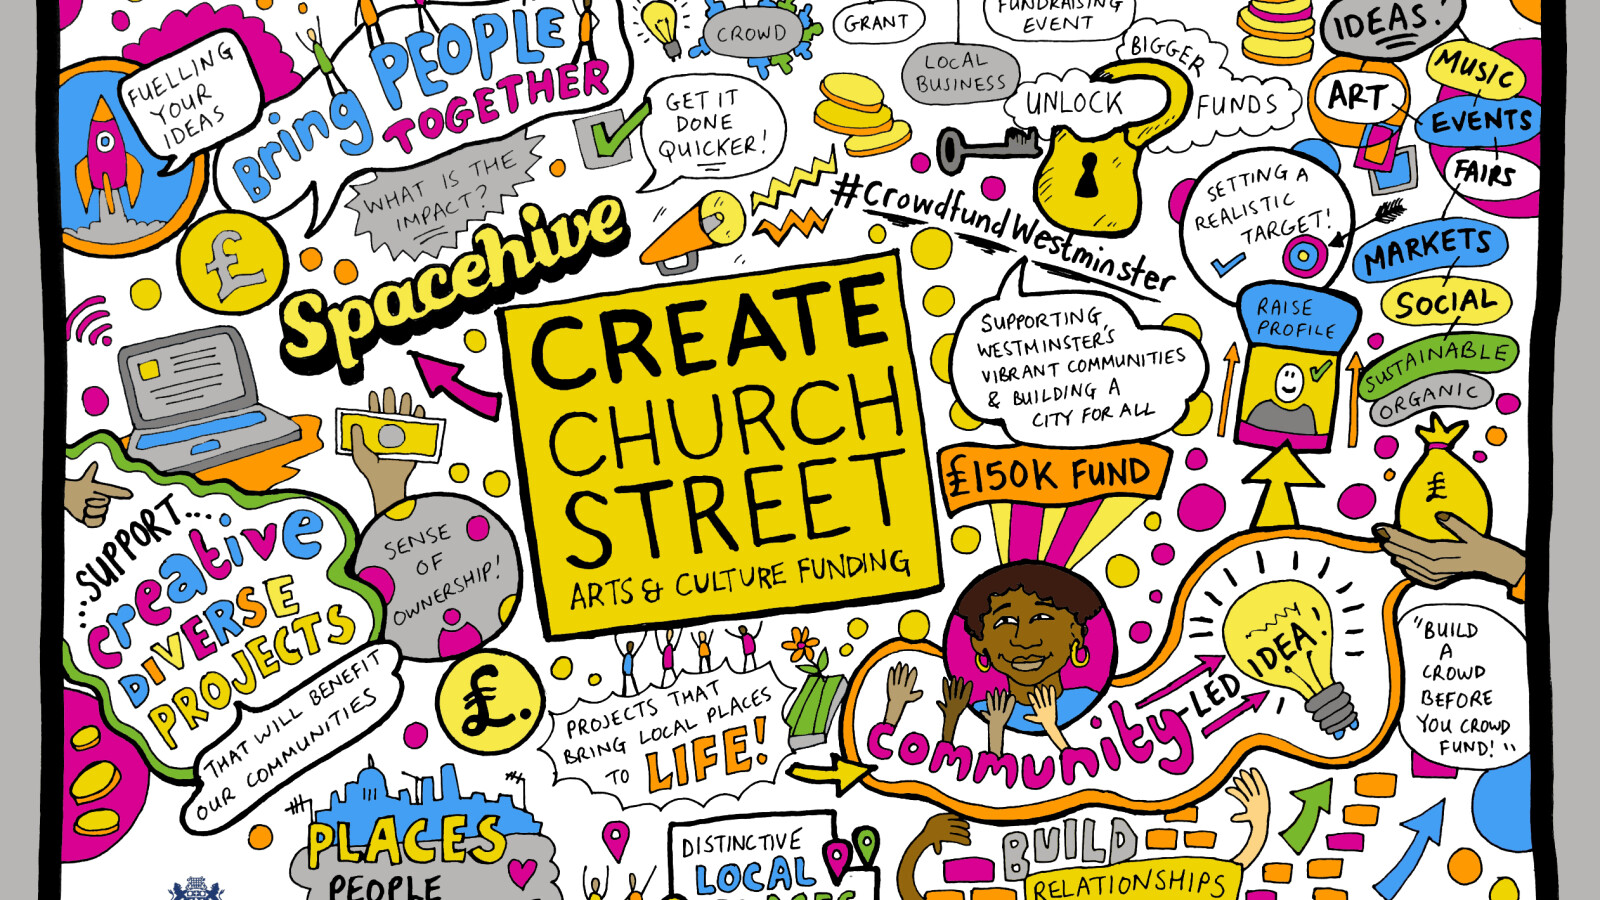 Create Church Street. Jenny Leonard Art 002